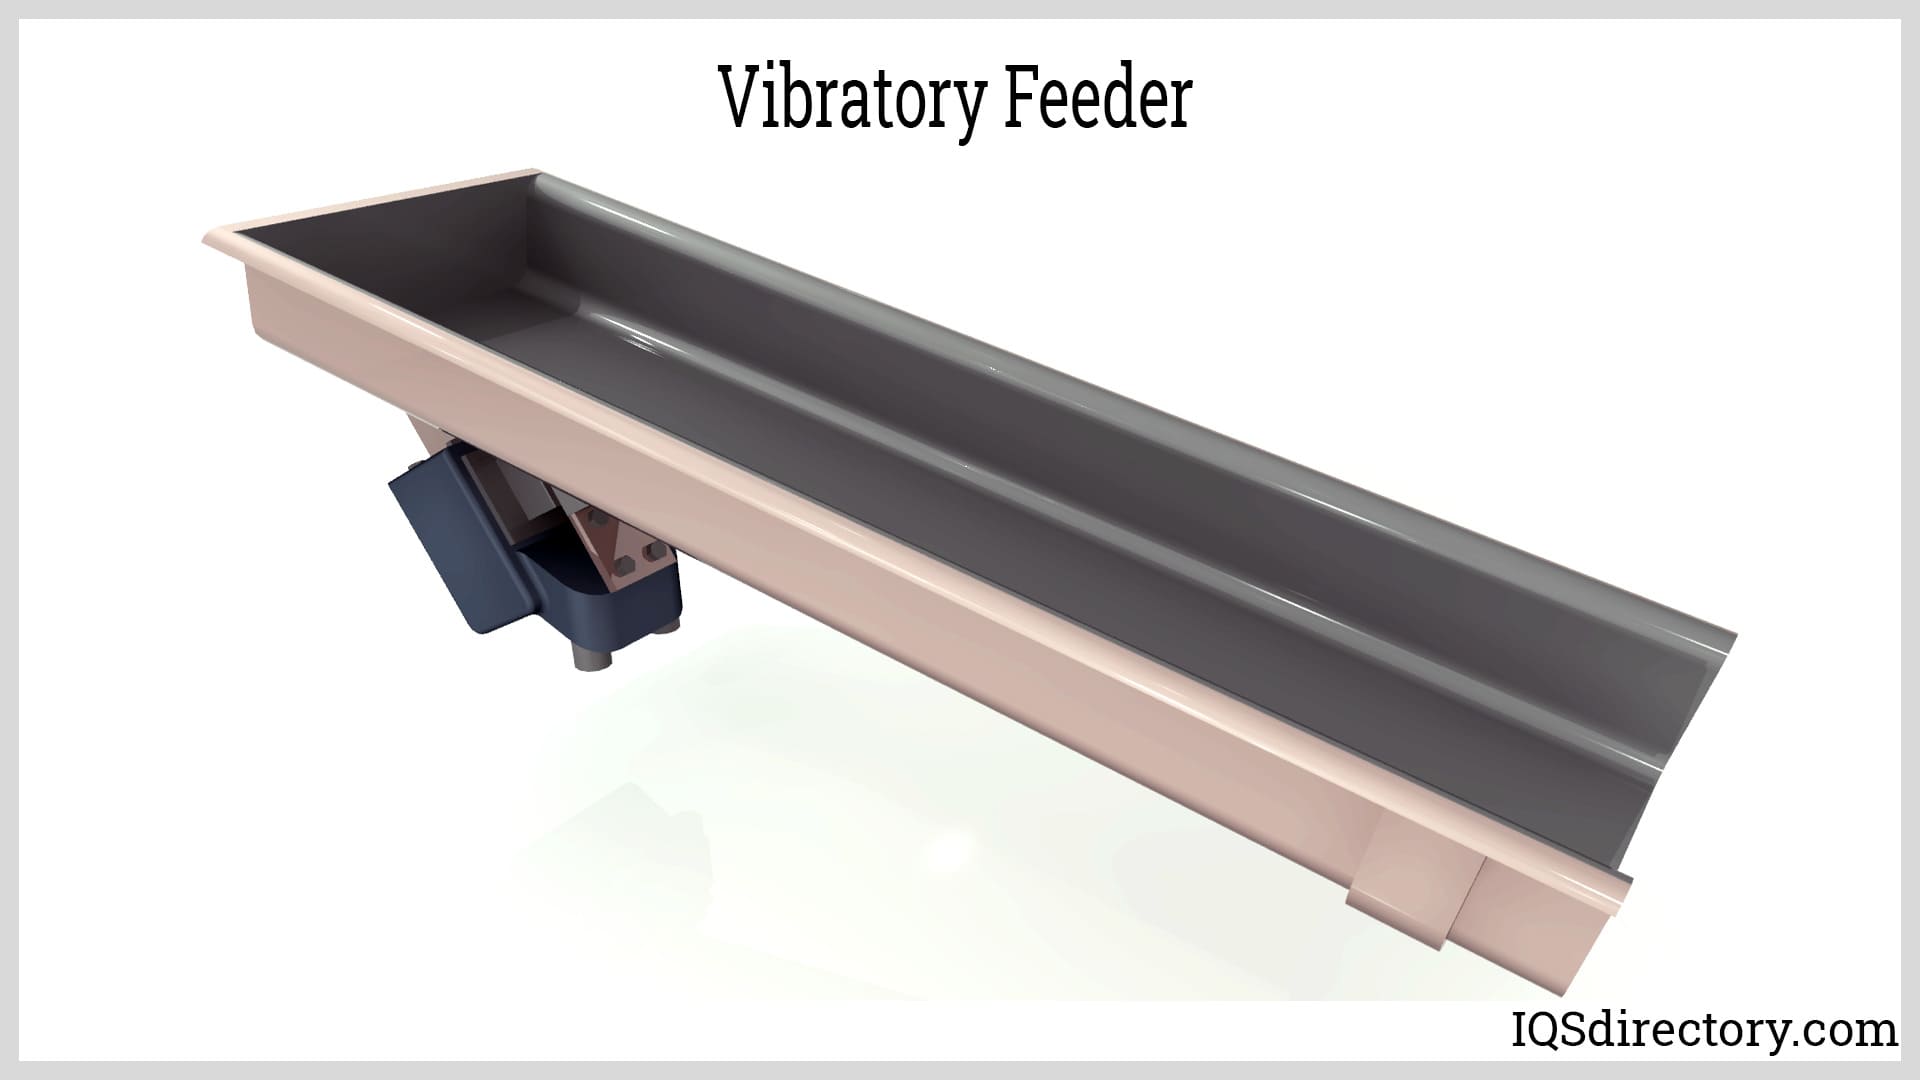 Vibratory Feeder